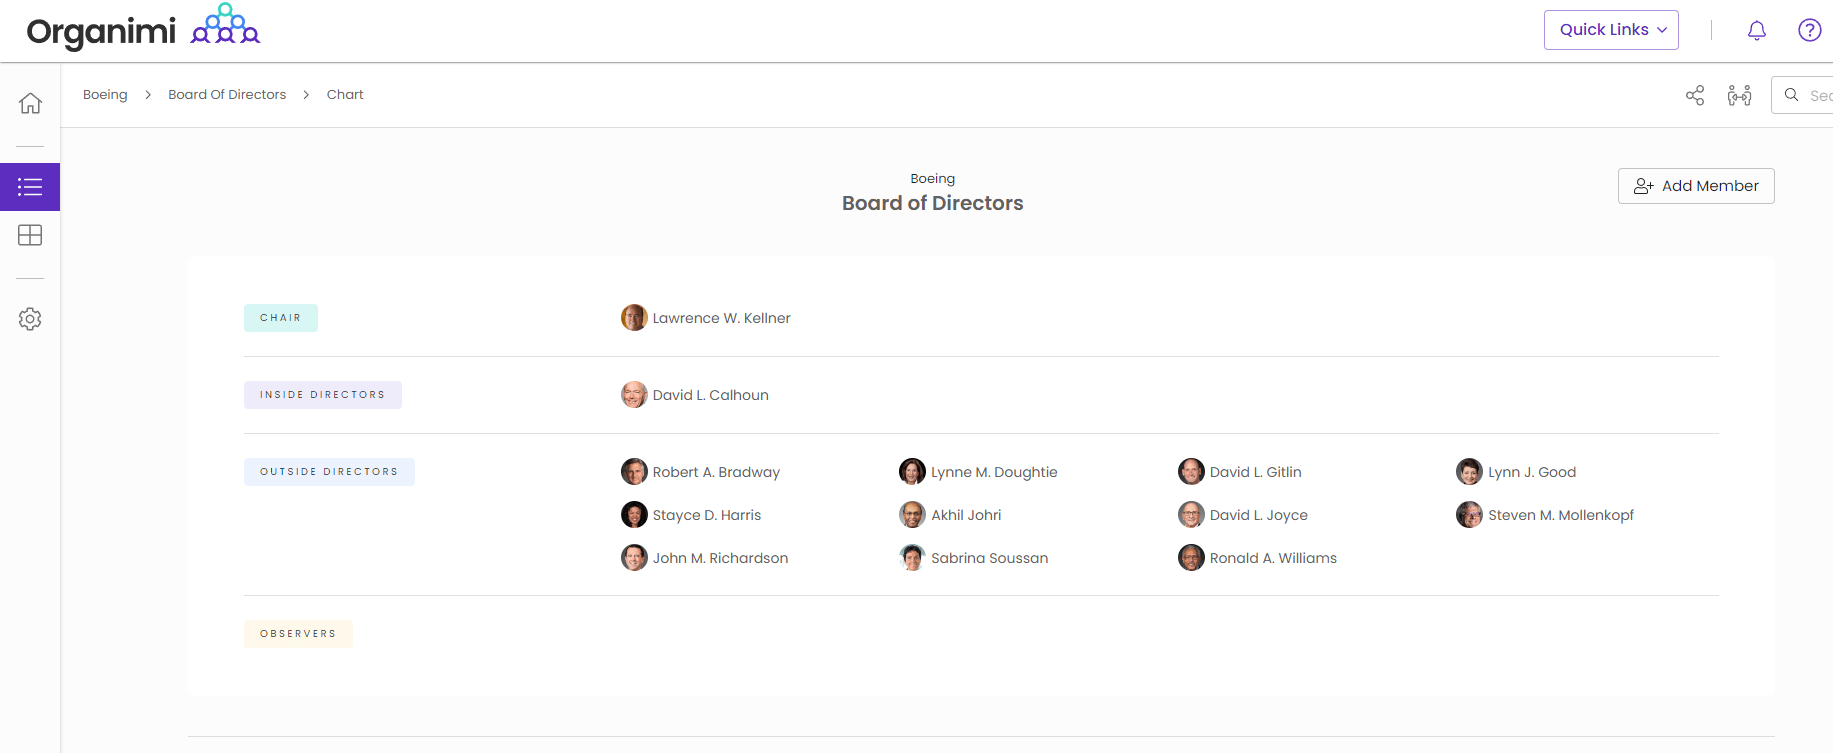 Boeing's Board of Directors Chart